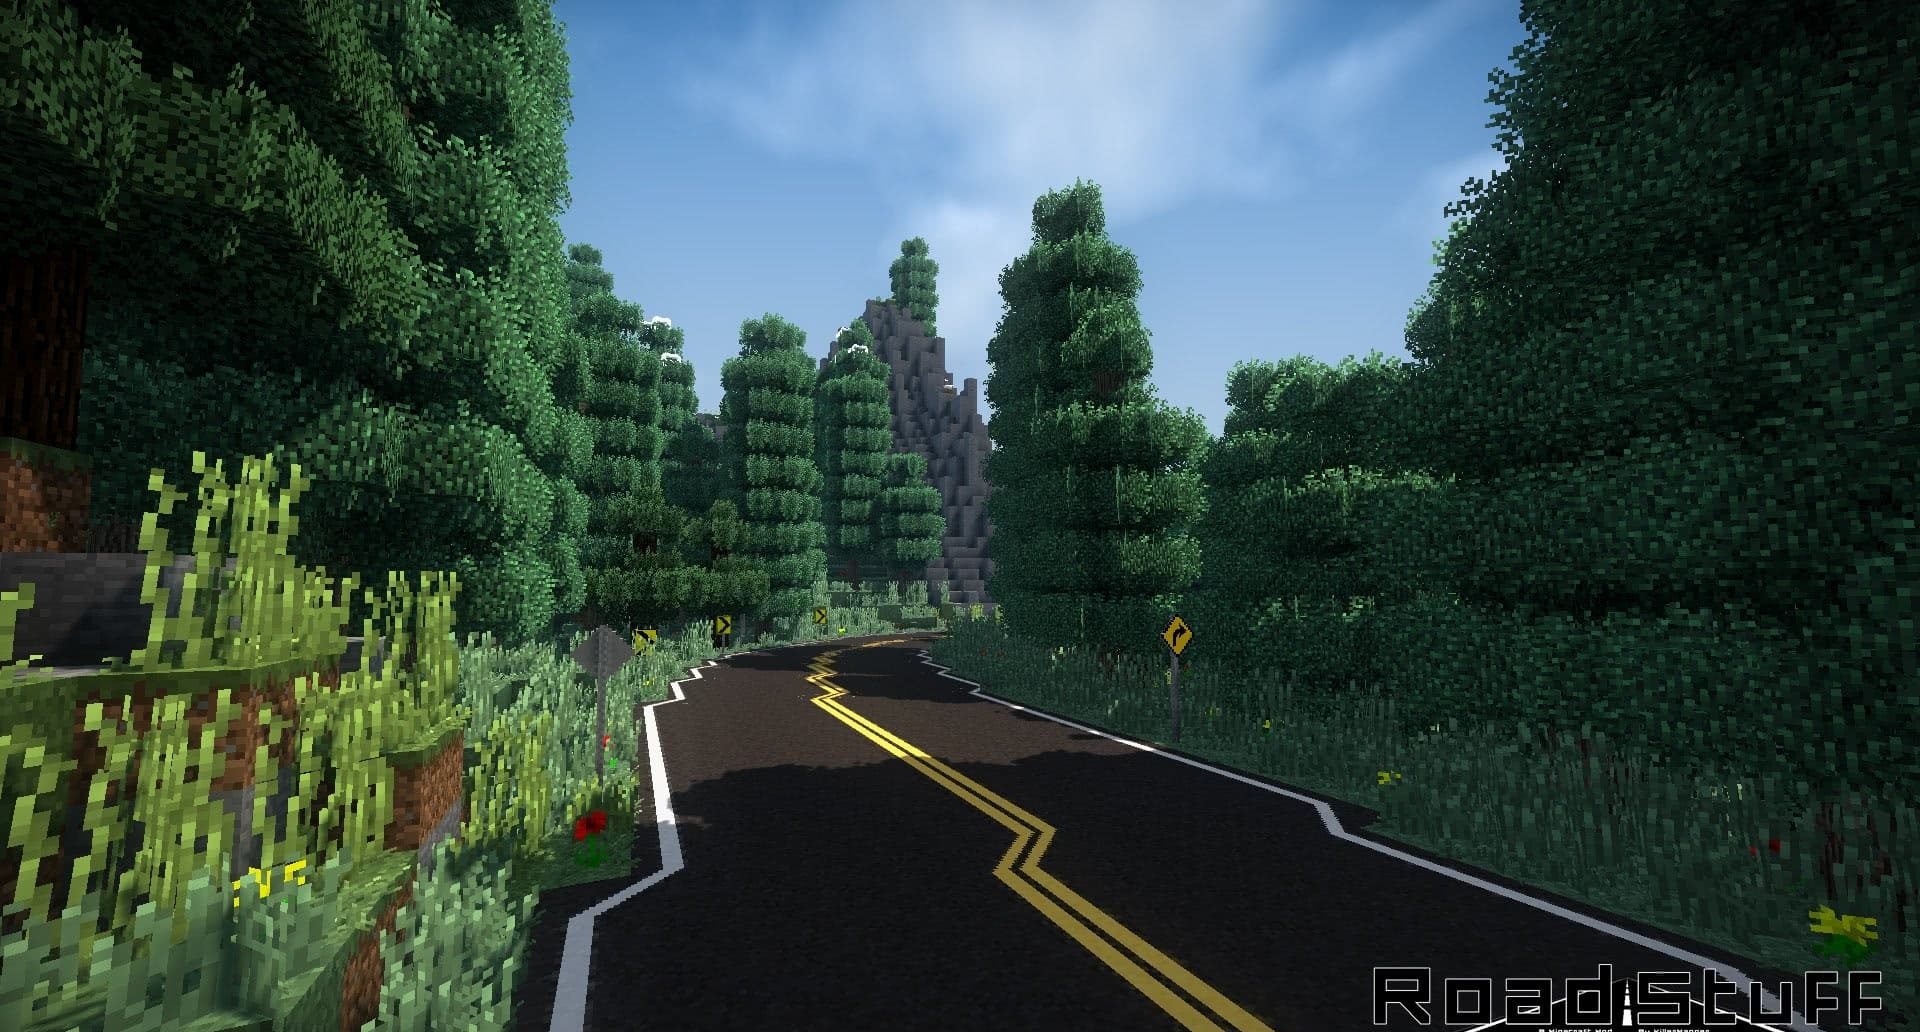 Just Road Stuff screenshot 1